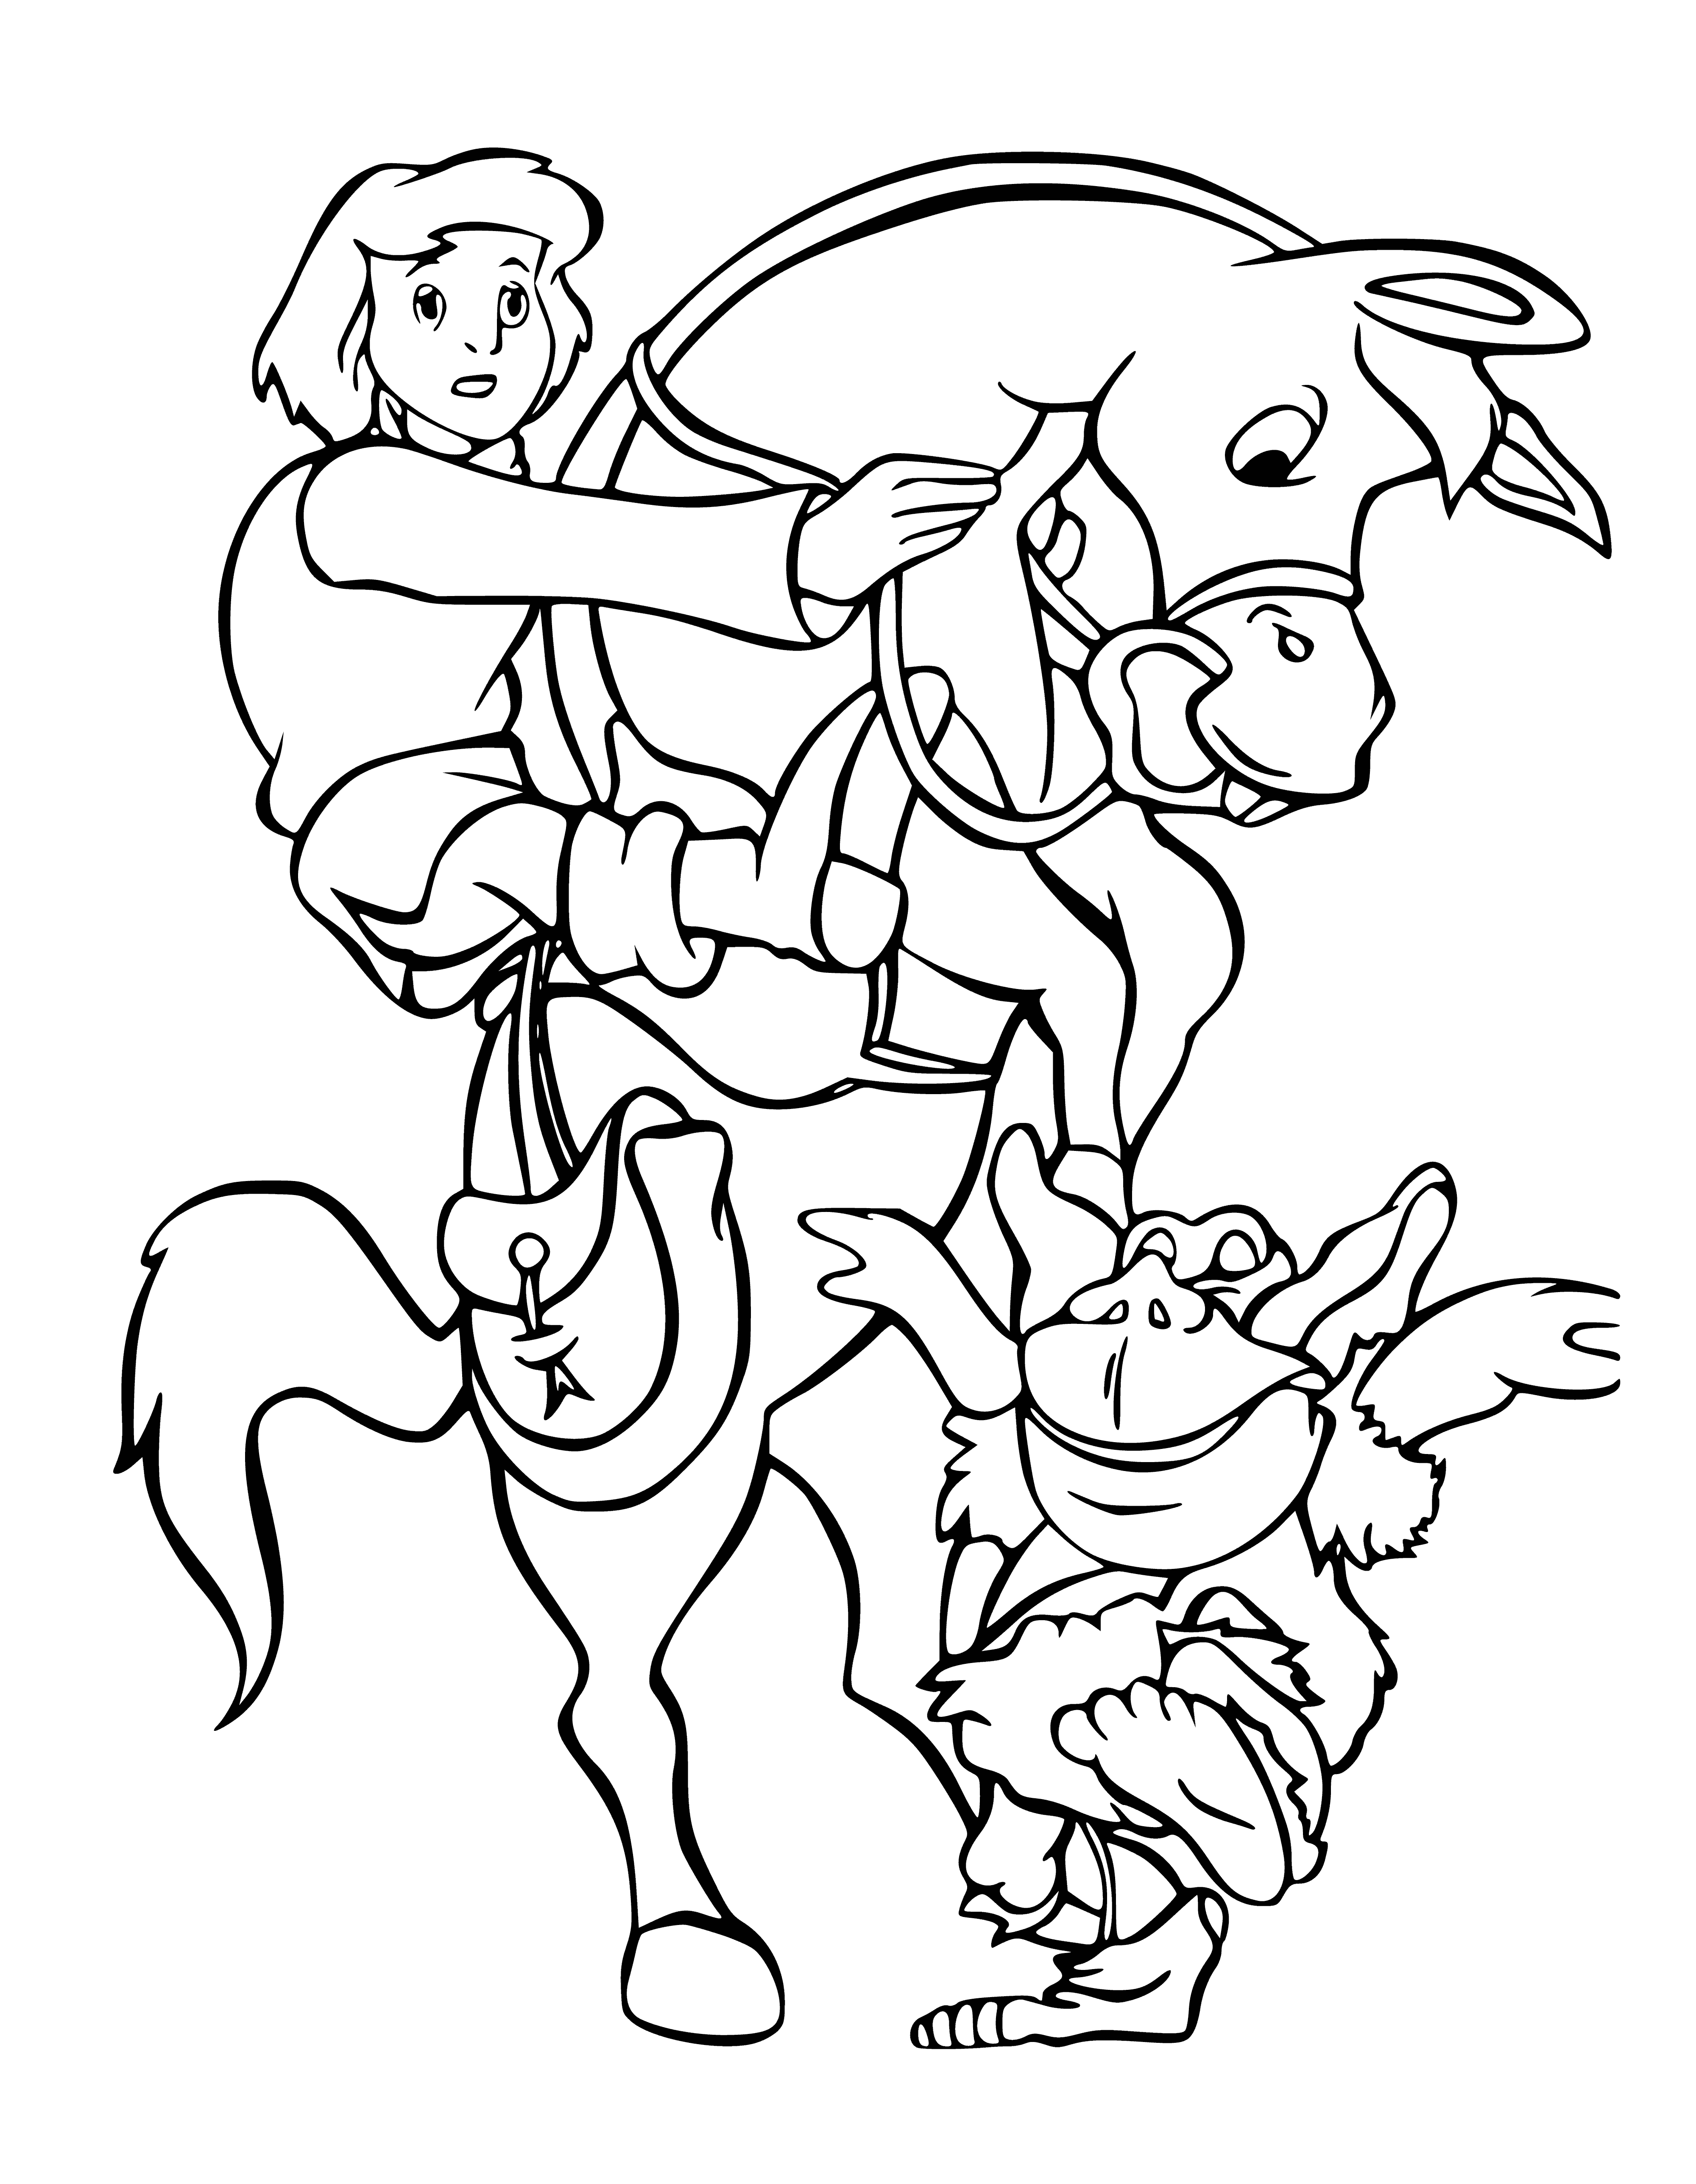 Boy on horseback coloring page